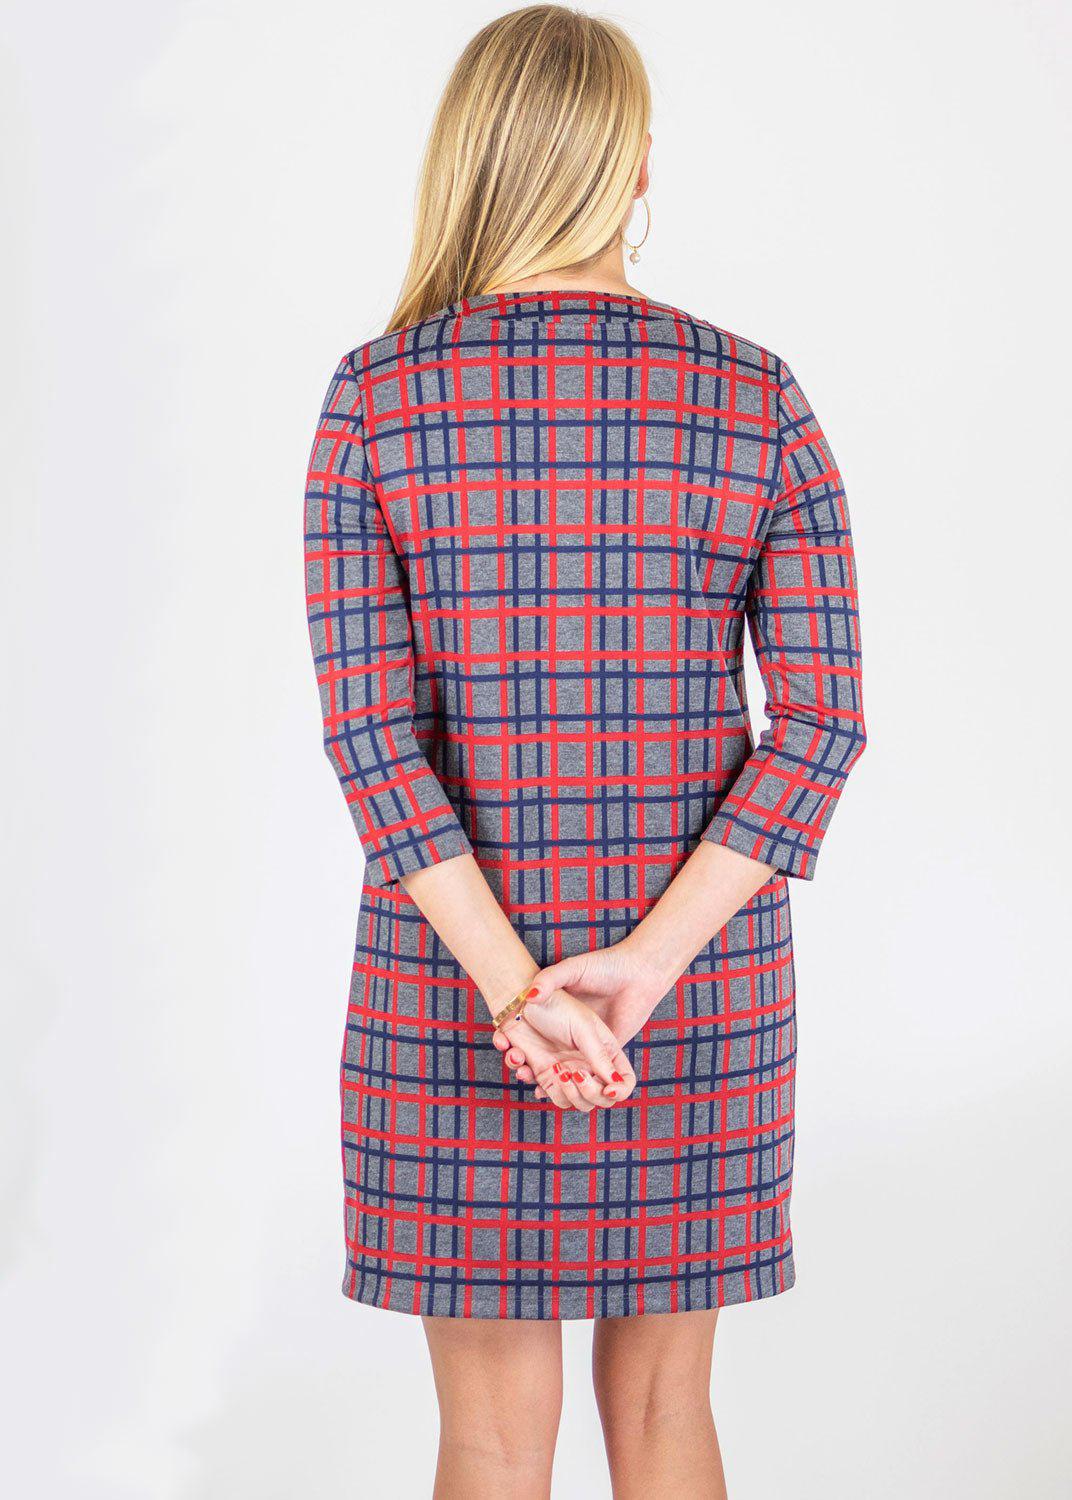 lucille-dress-3-4-sleeve-back-plaid-blue-red-gray-246262.jpg